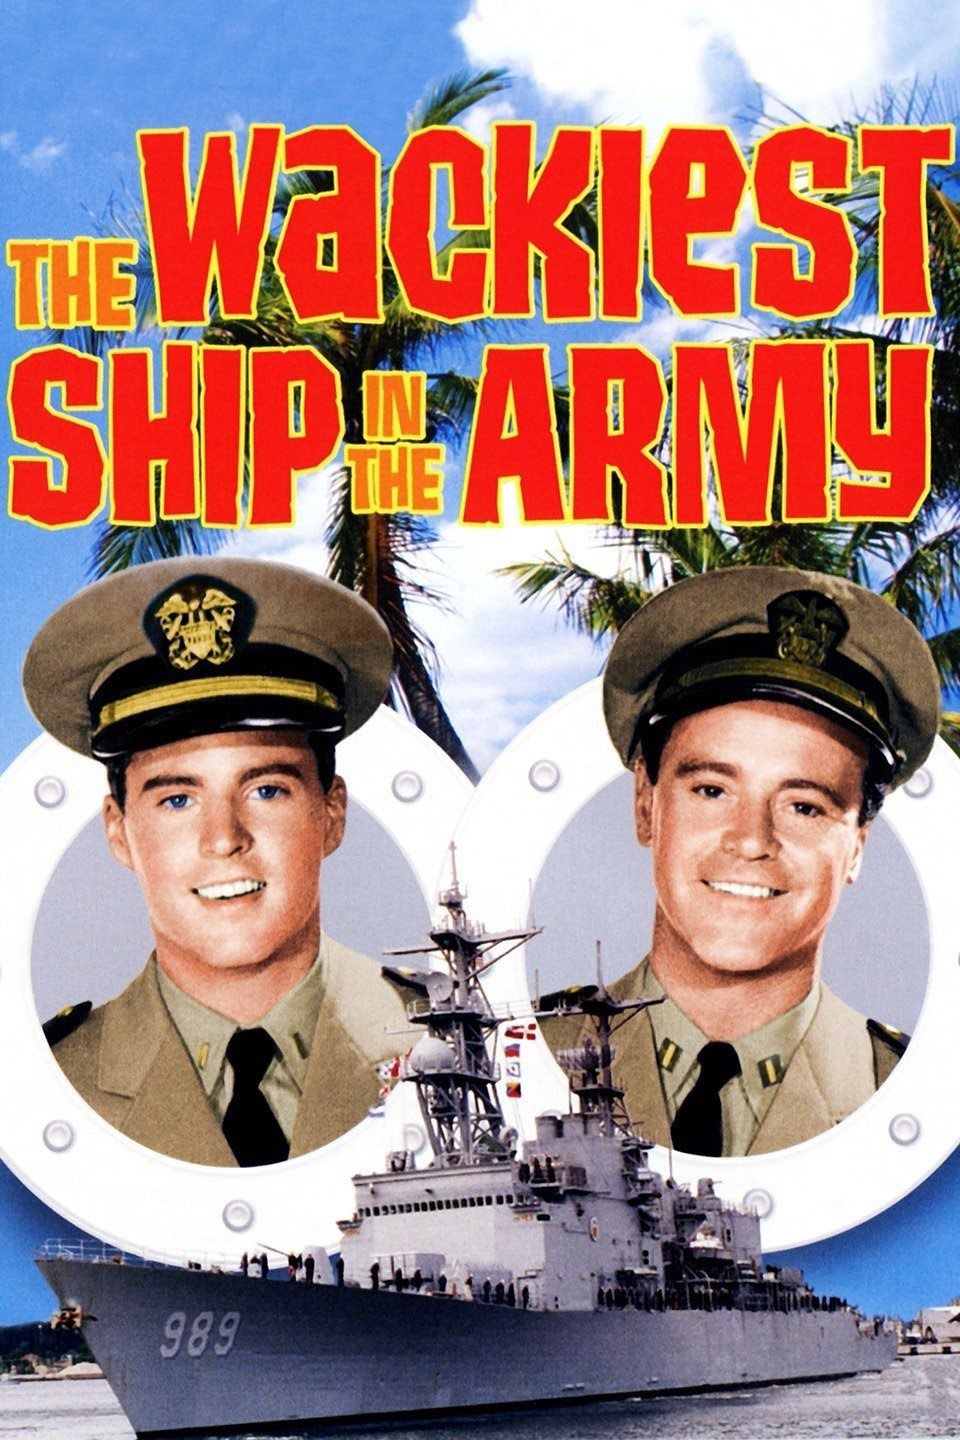 The Wackiest Ship in the Army ne zaman